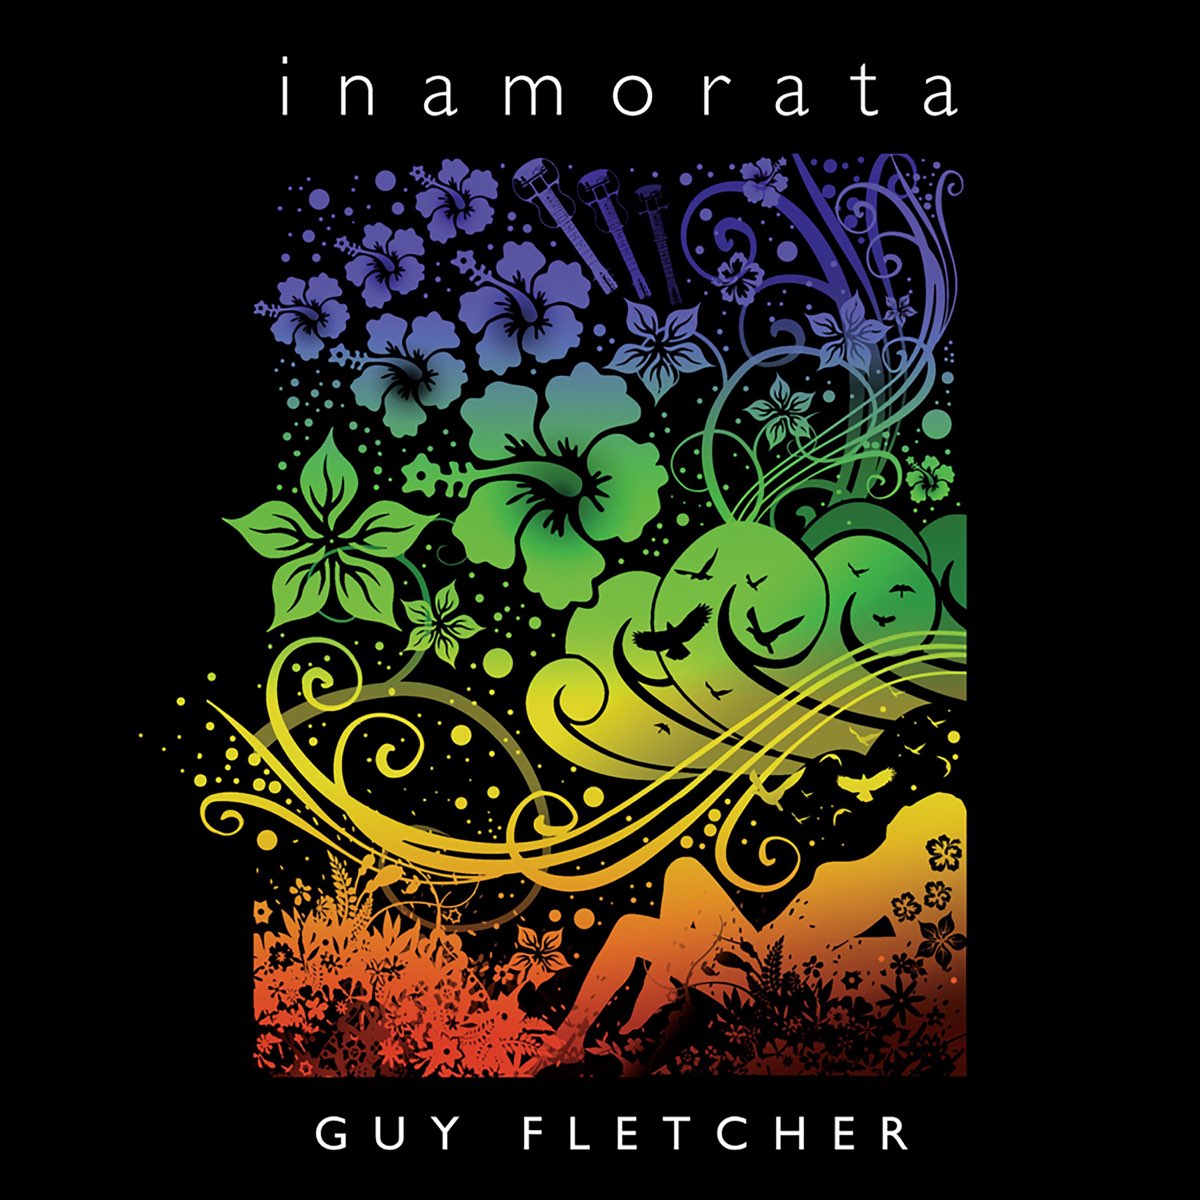 Guy Fletcher Inamorata, 2008